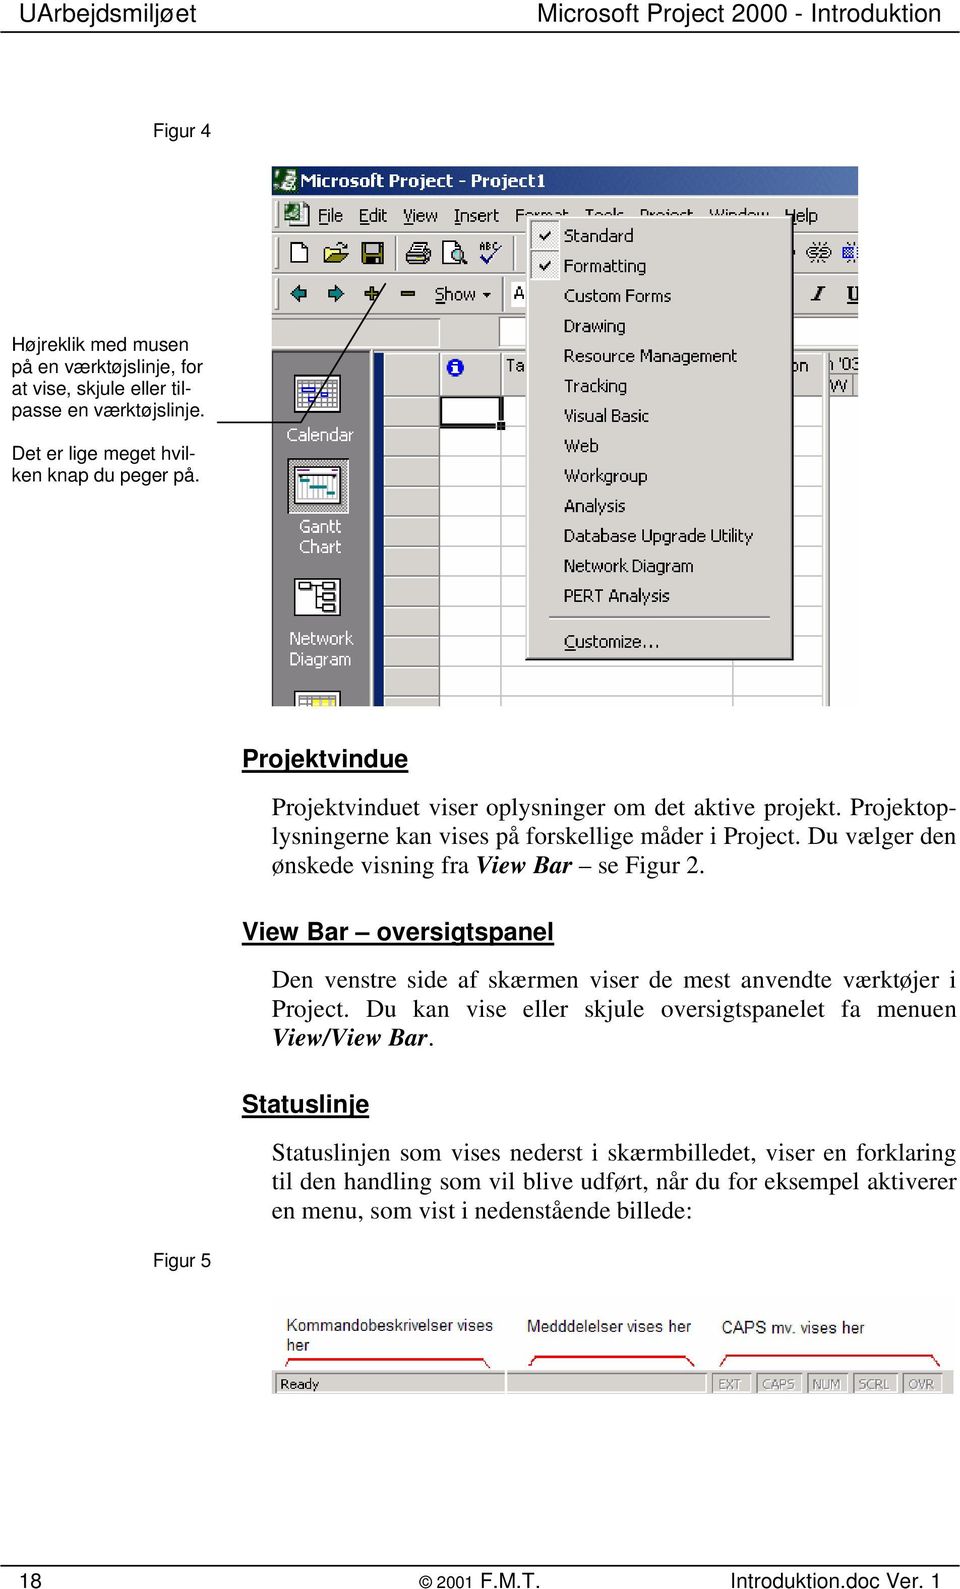 Microsoft Project Introduktion - PDF Free Download